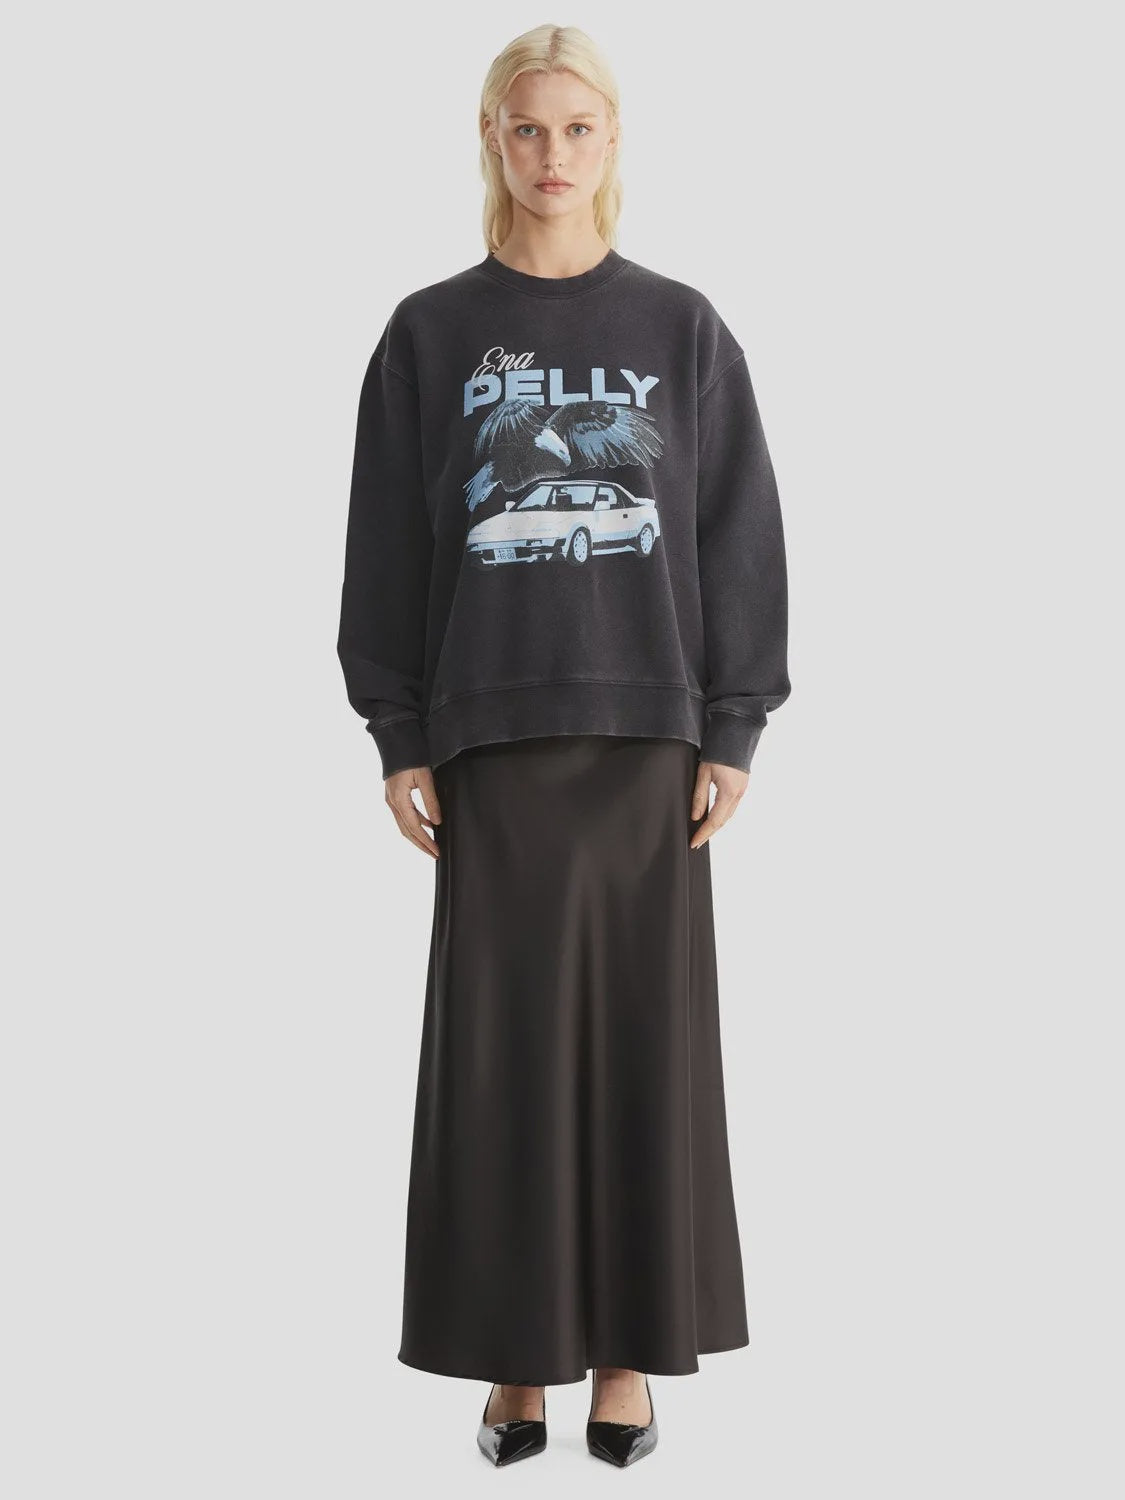 Ena Pelly | Lola Oversized Sweater Drift